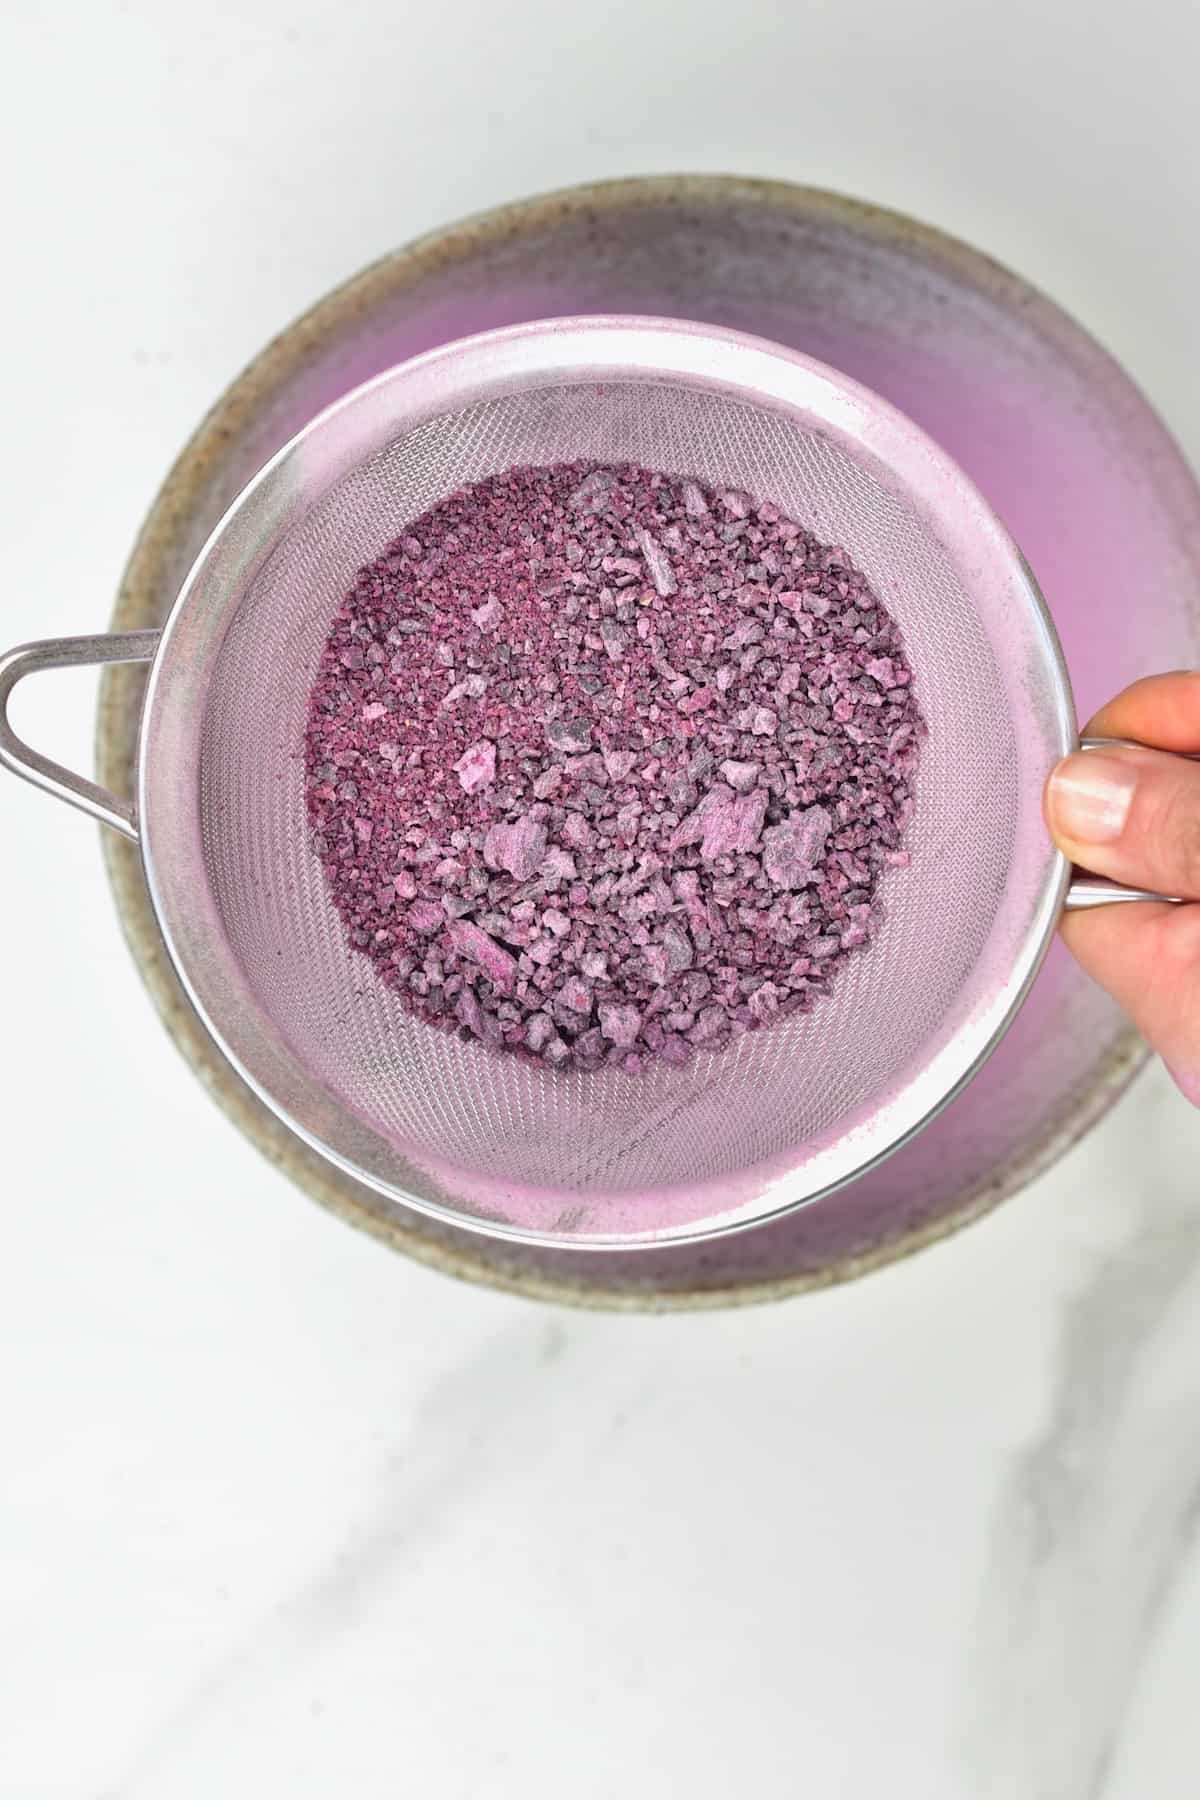 Sieving purple potato powder